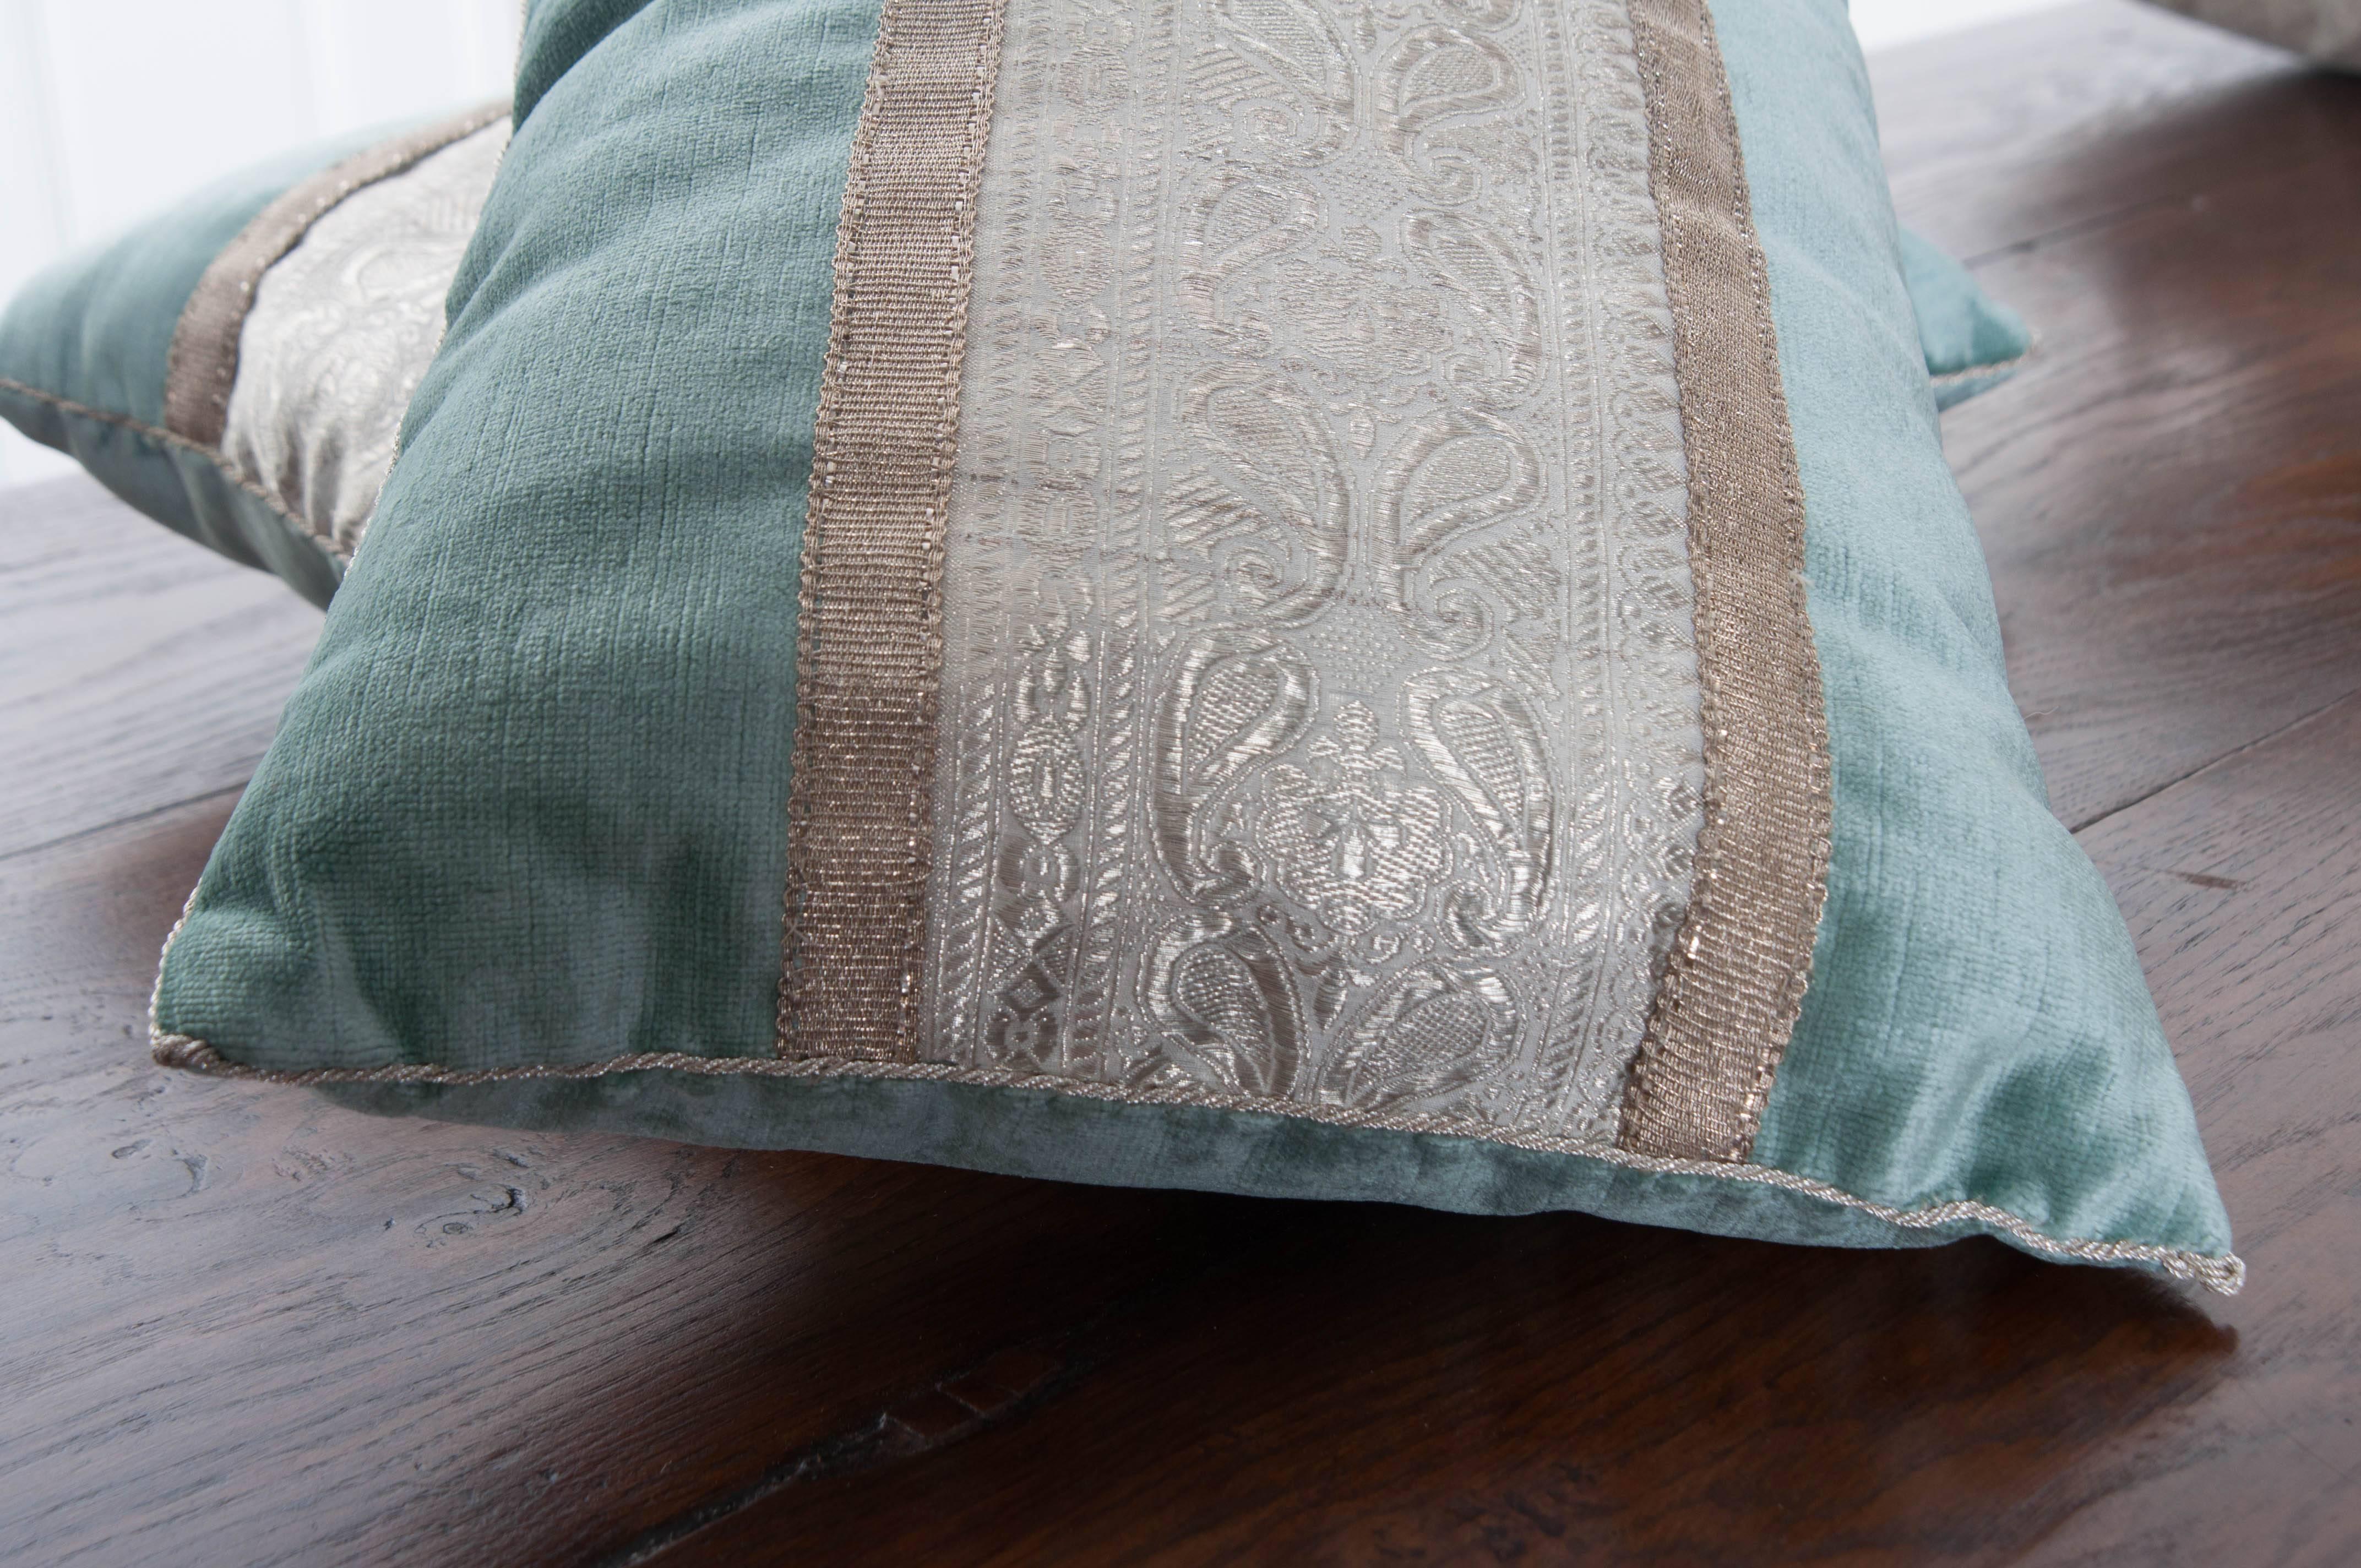 20th Century Pair of Antique Textile Pillows by B.Viz Designs